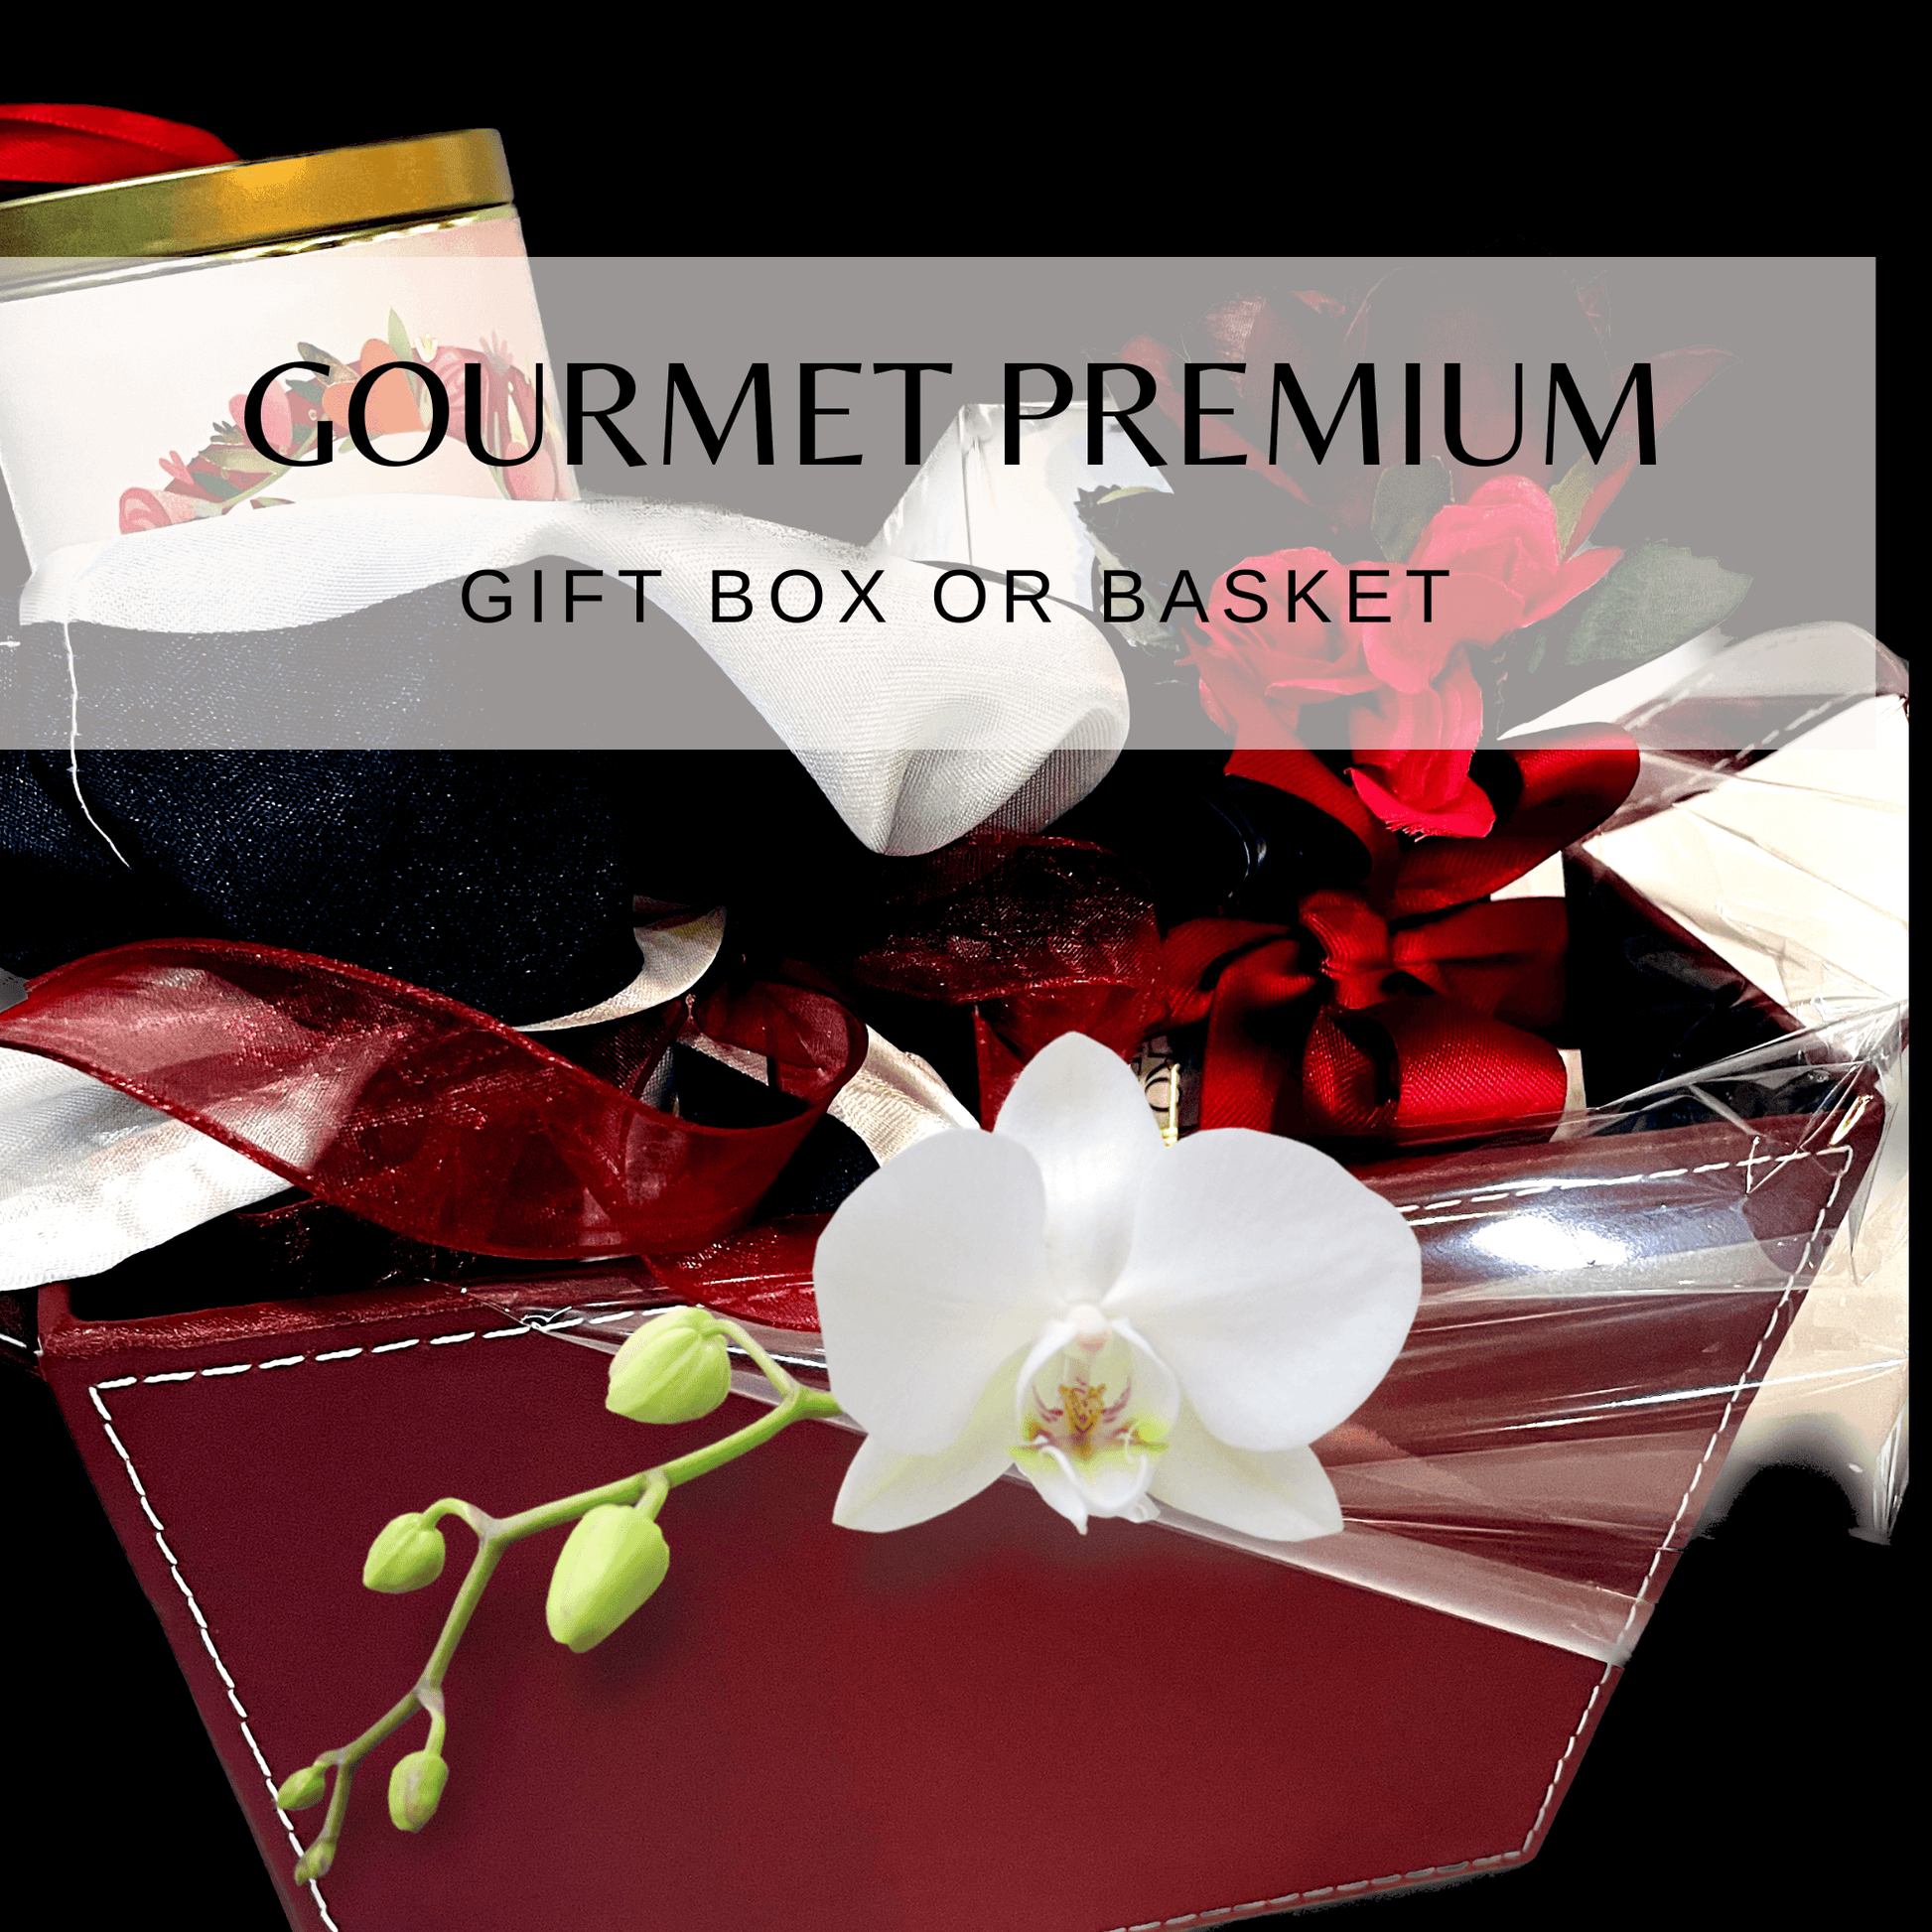 Gourmet Premium Gift Box or Basket